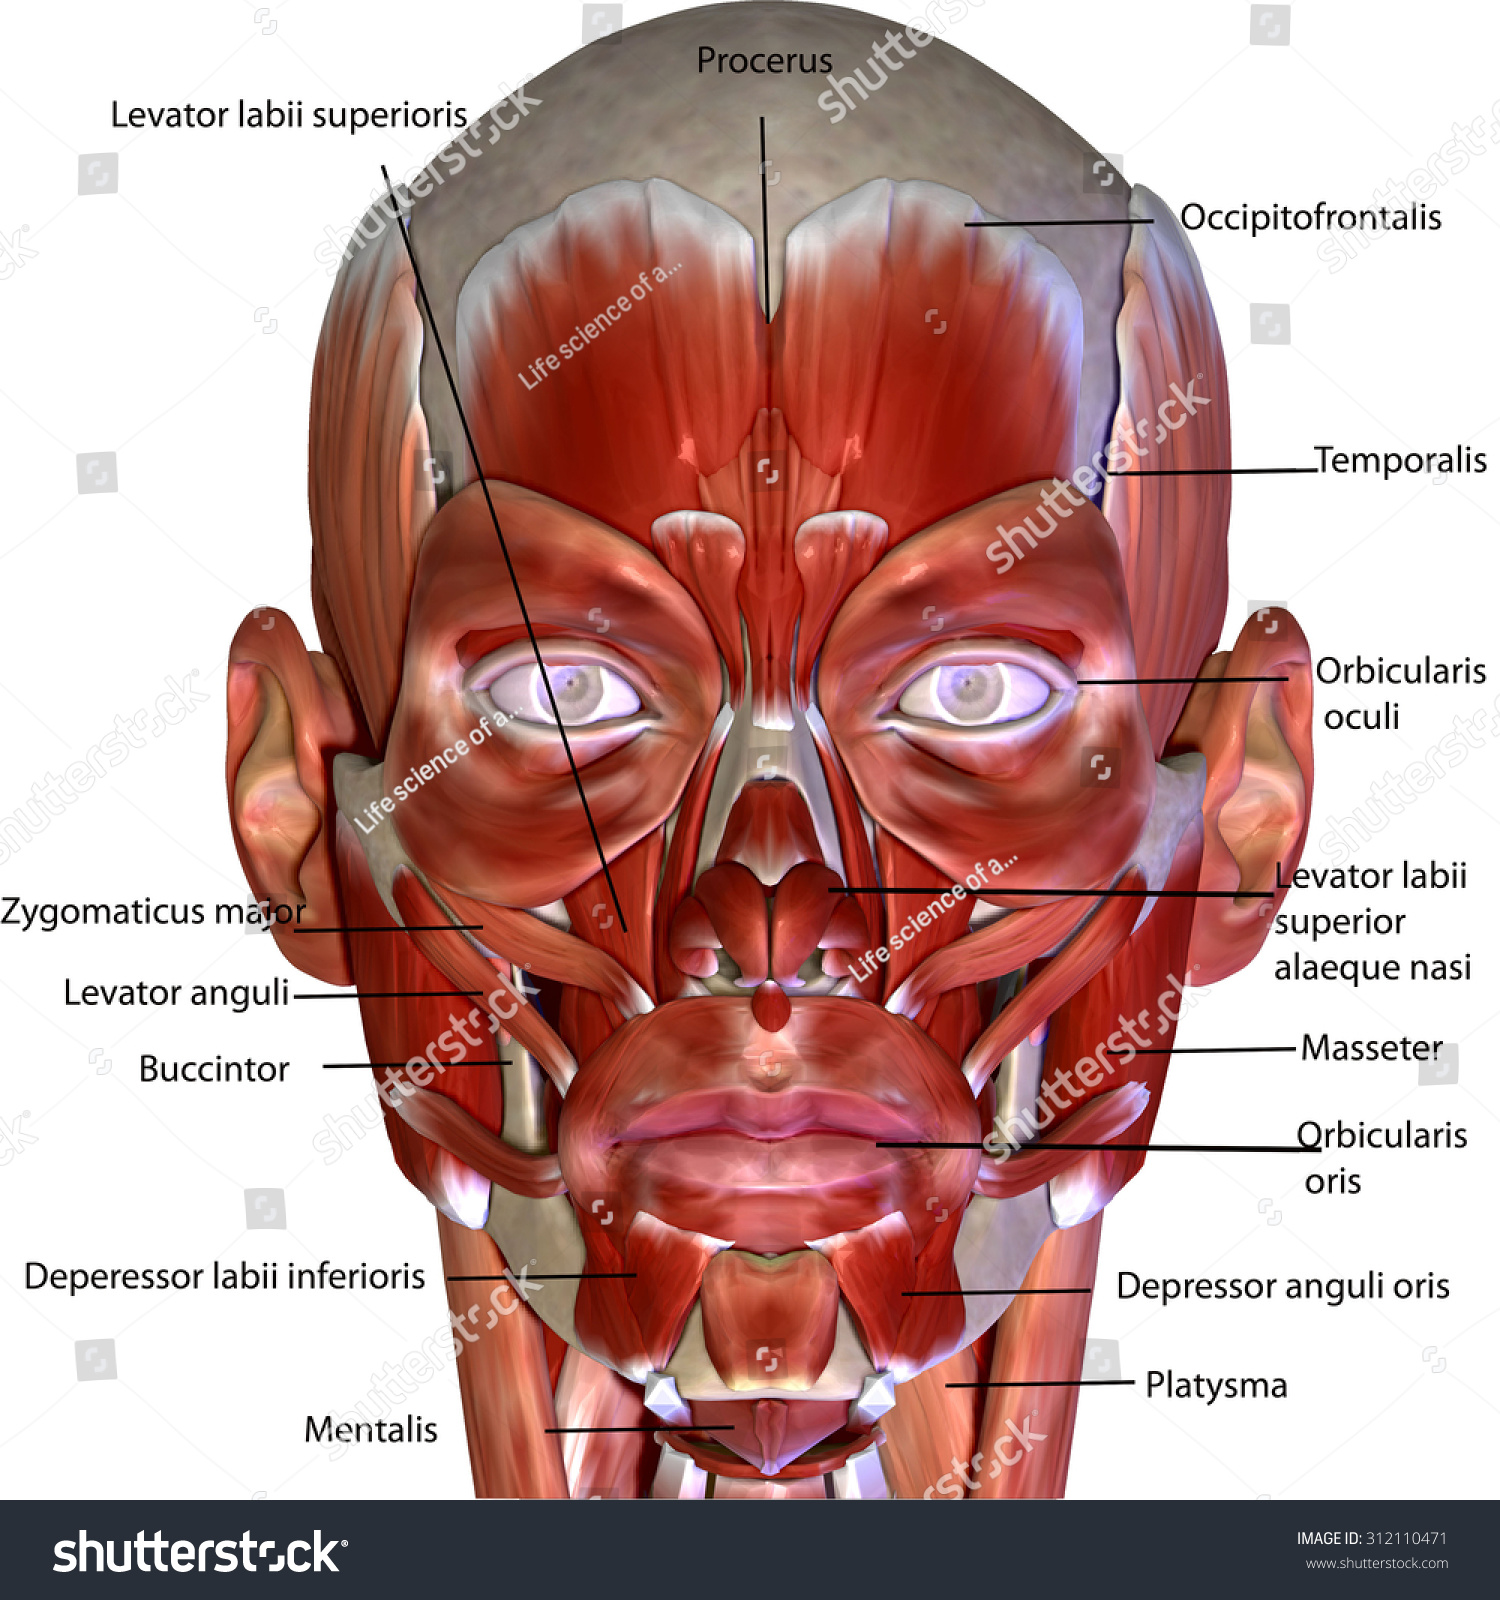 Human Body Face Muscles Stock Illustration 312110471 - Shutterstock